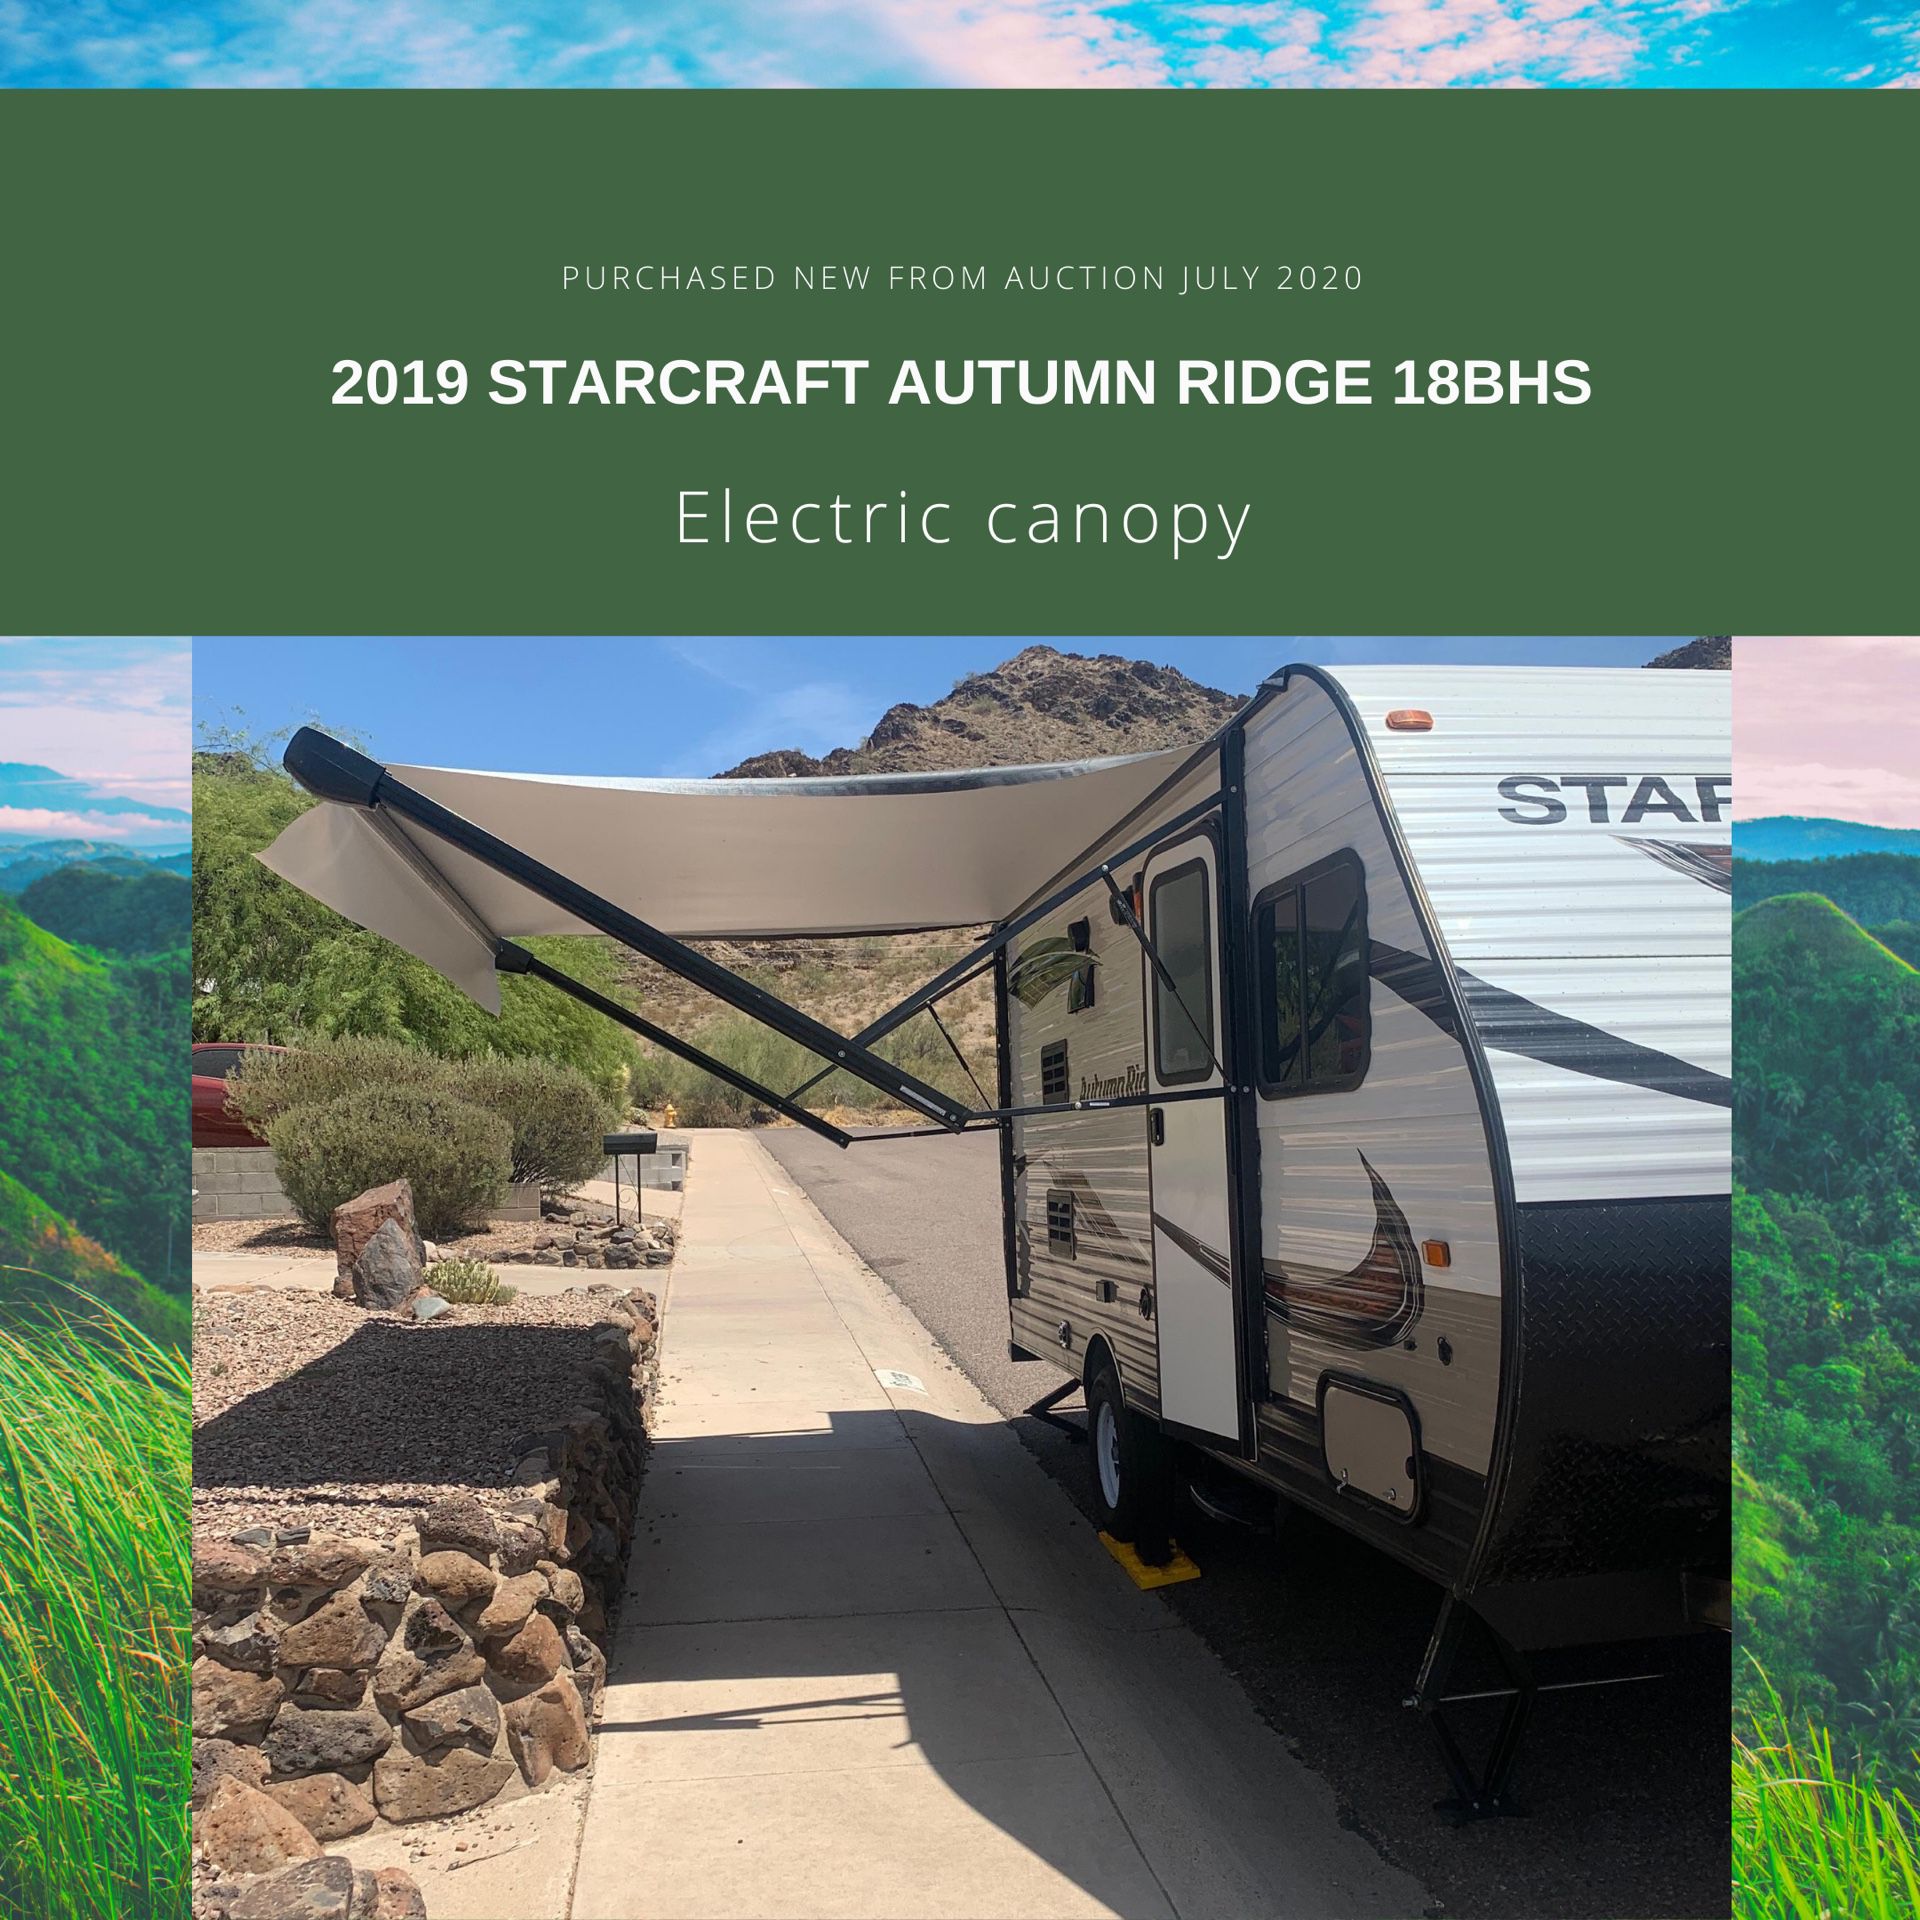 2019 Starcraft Autumn Ridge 18bhs